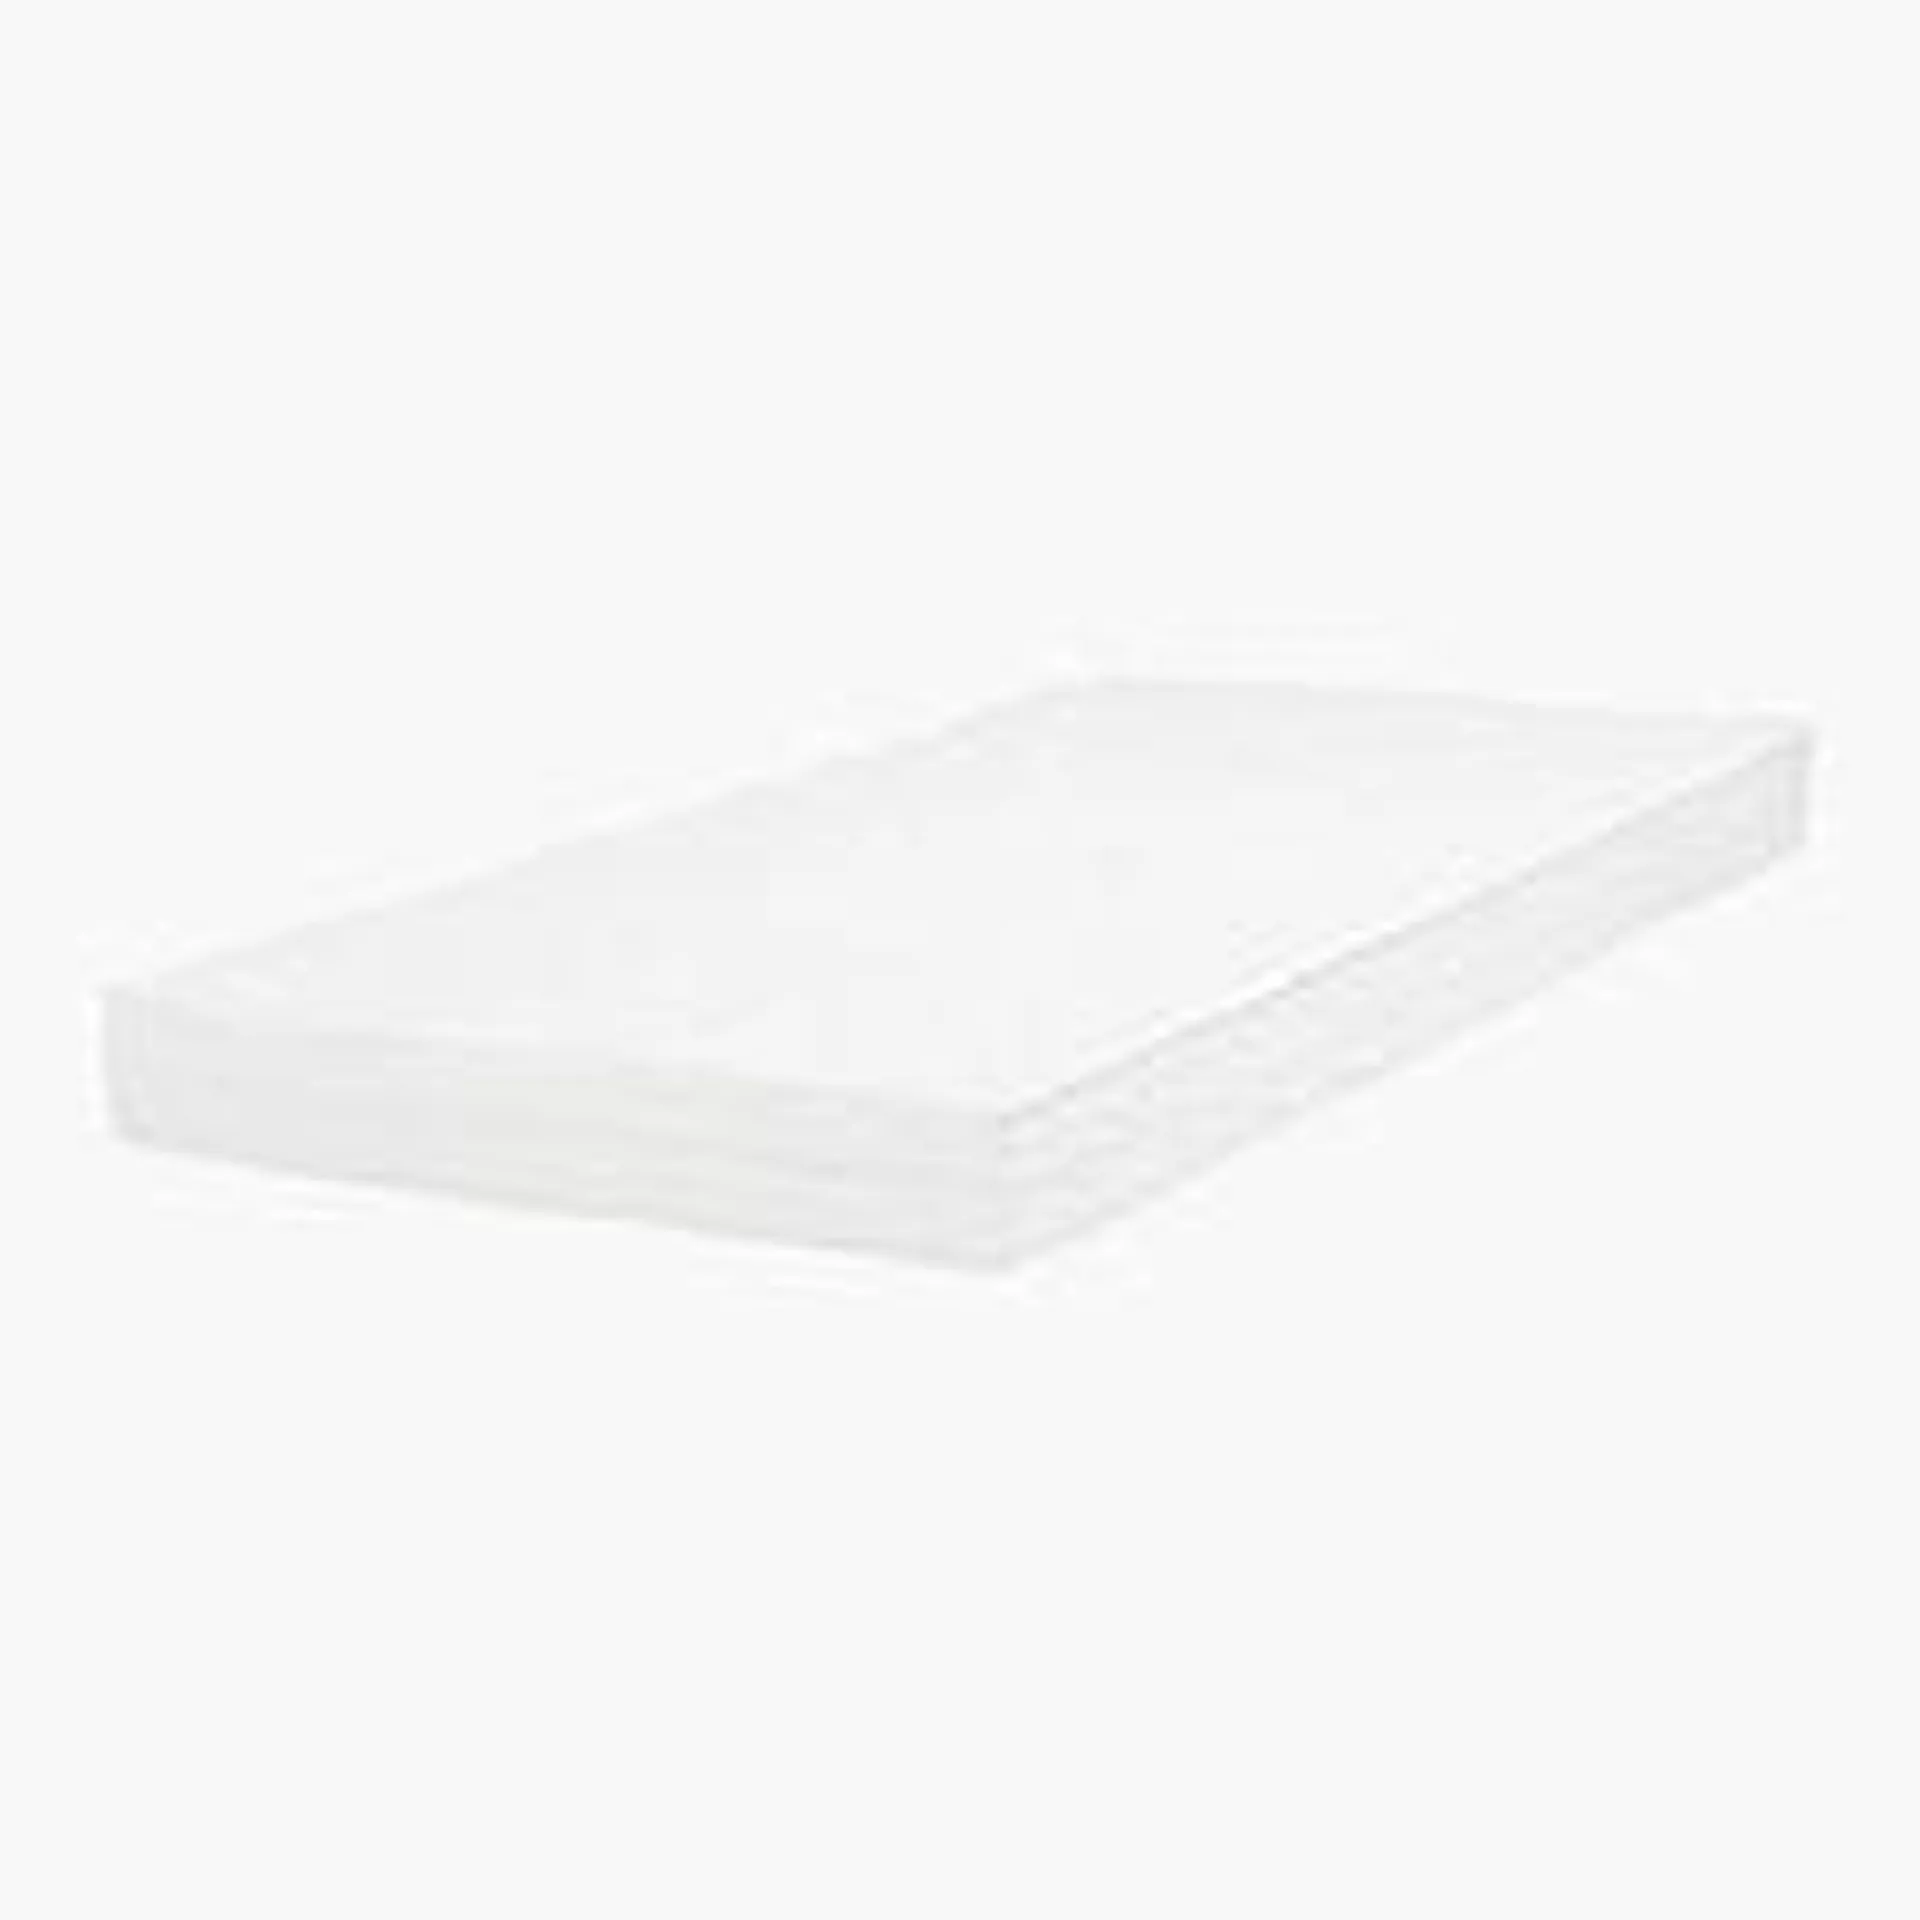 Foam mattress PLUS F30 DREAMZONE Double